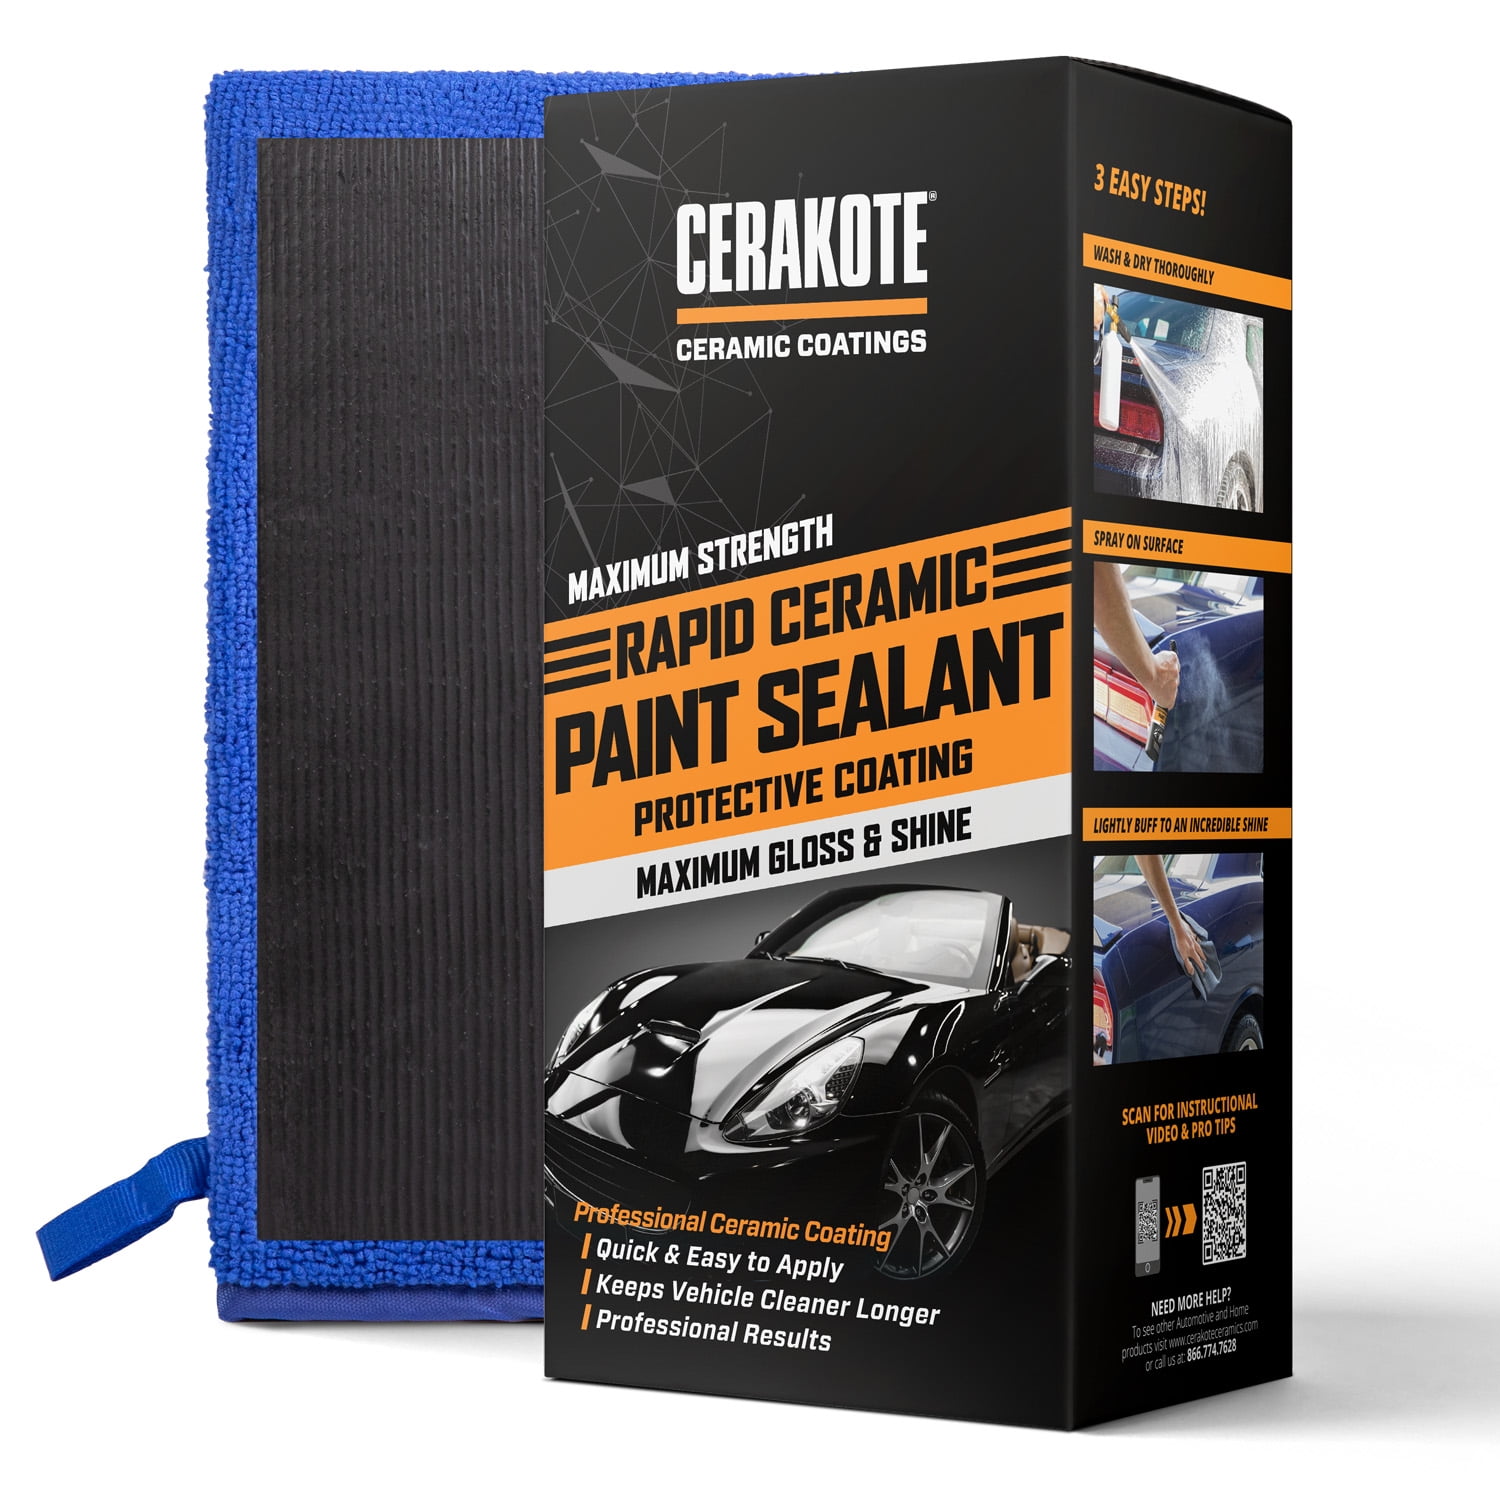 CERAKOTE® Rapid Ceramic Paint Sealant (12 Oz.) - Now 50% More With